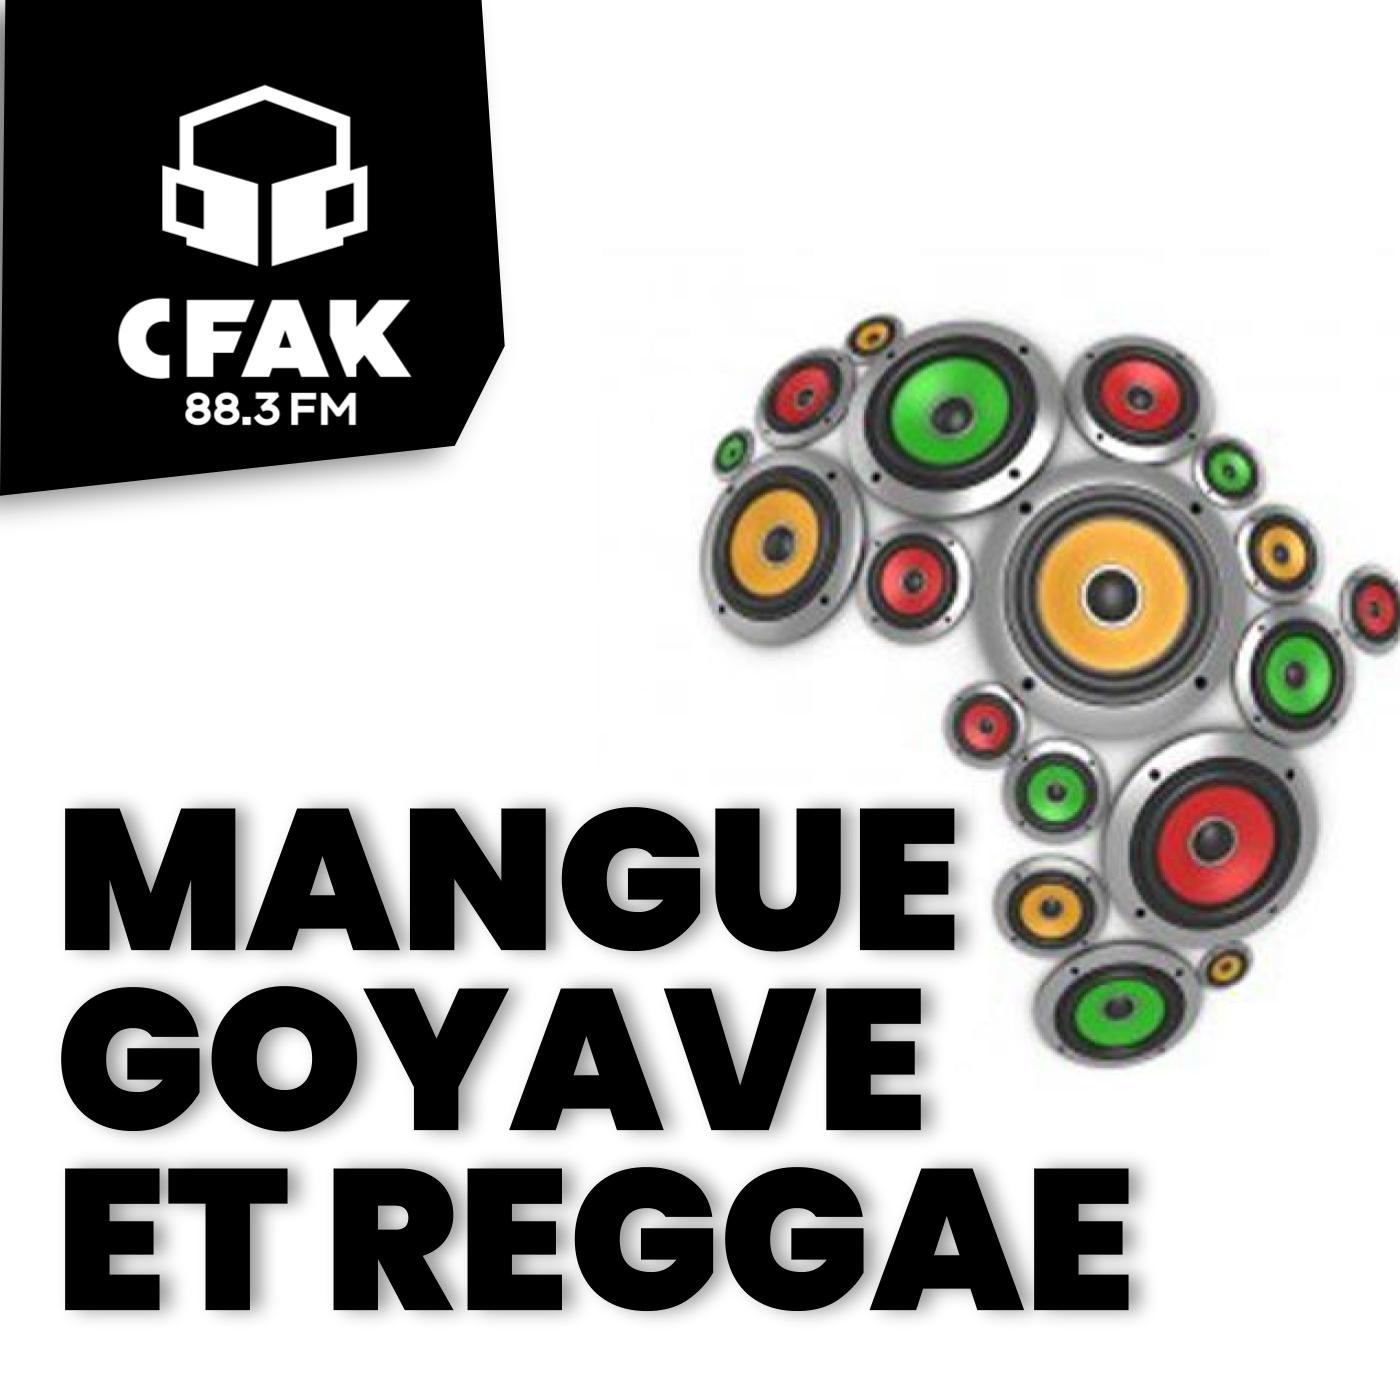 Mangue, Goyave et Reggae – 16 juillet 2021